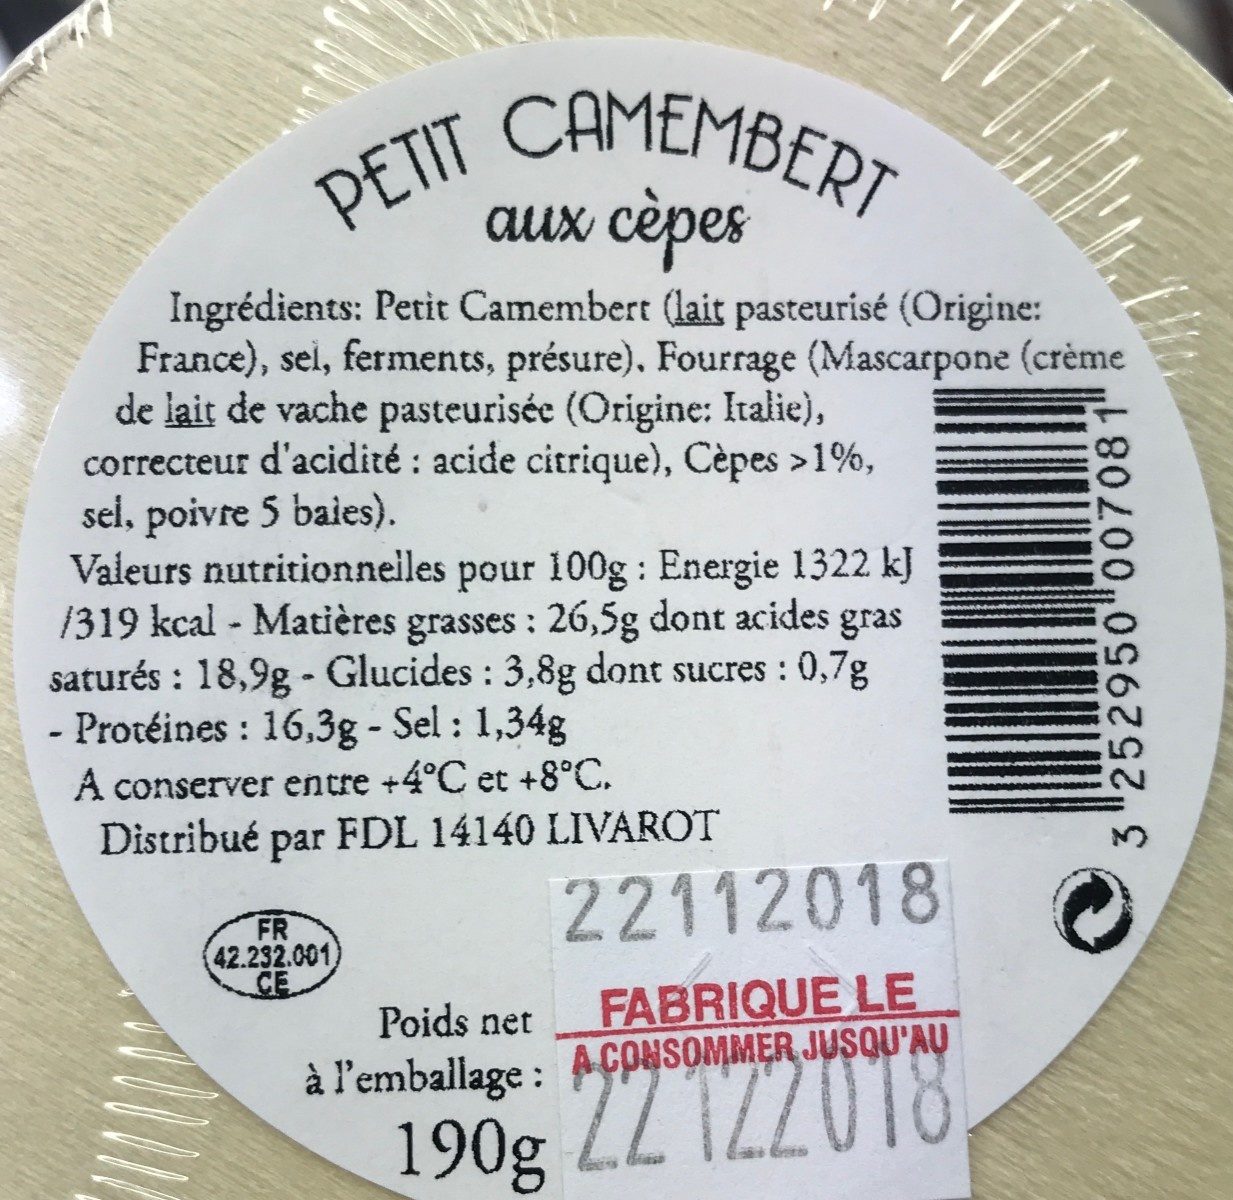 Petit camembert aux cepes - Ingredients - fr